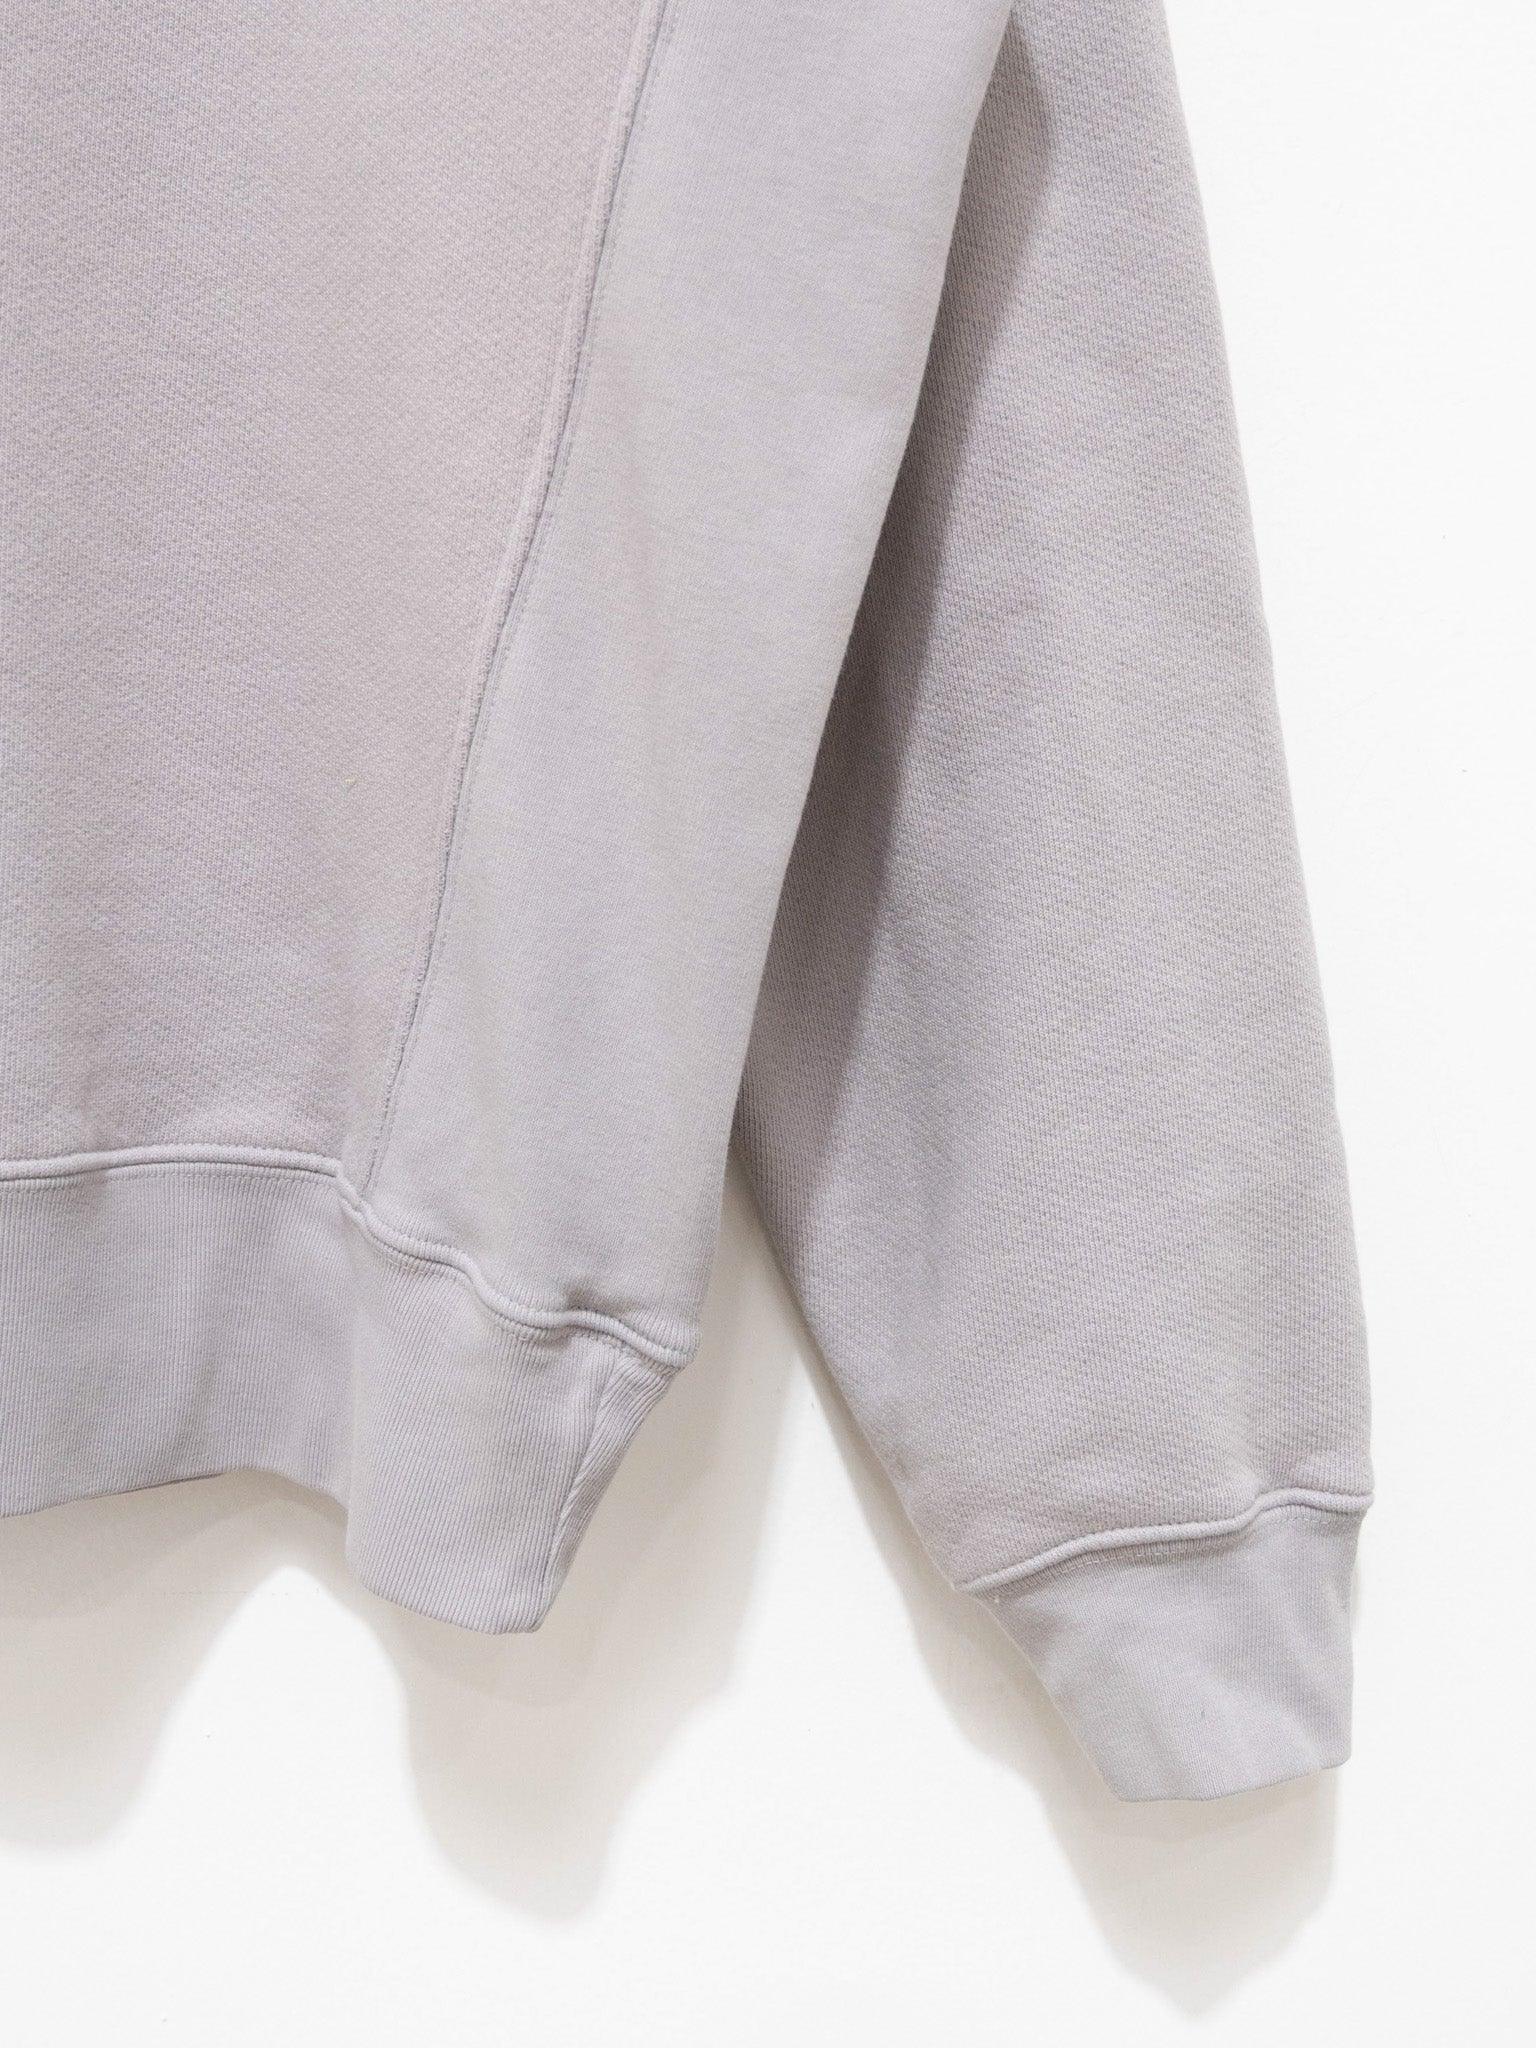 Namu Shop - paa LS Polo Sweatshirt Two - Gray